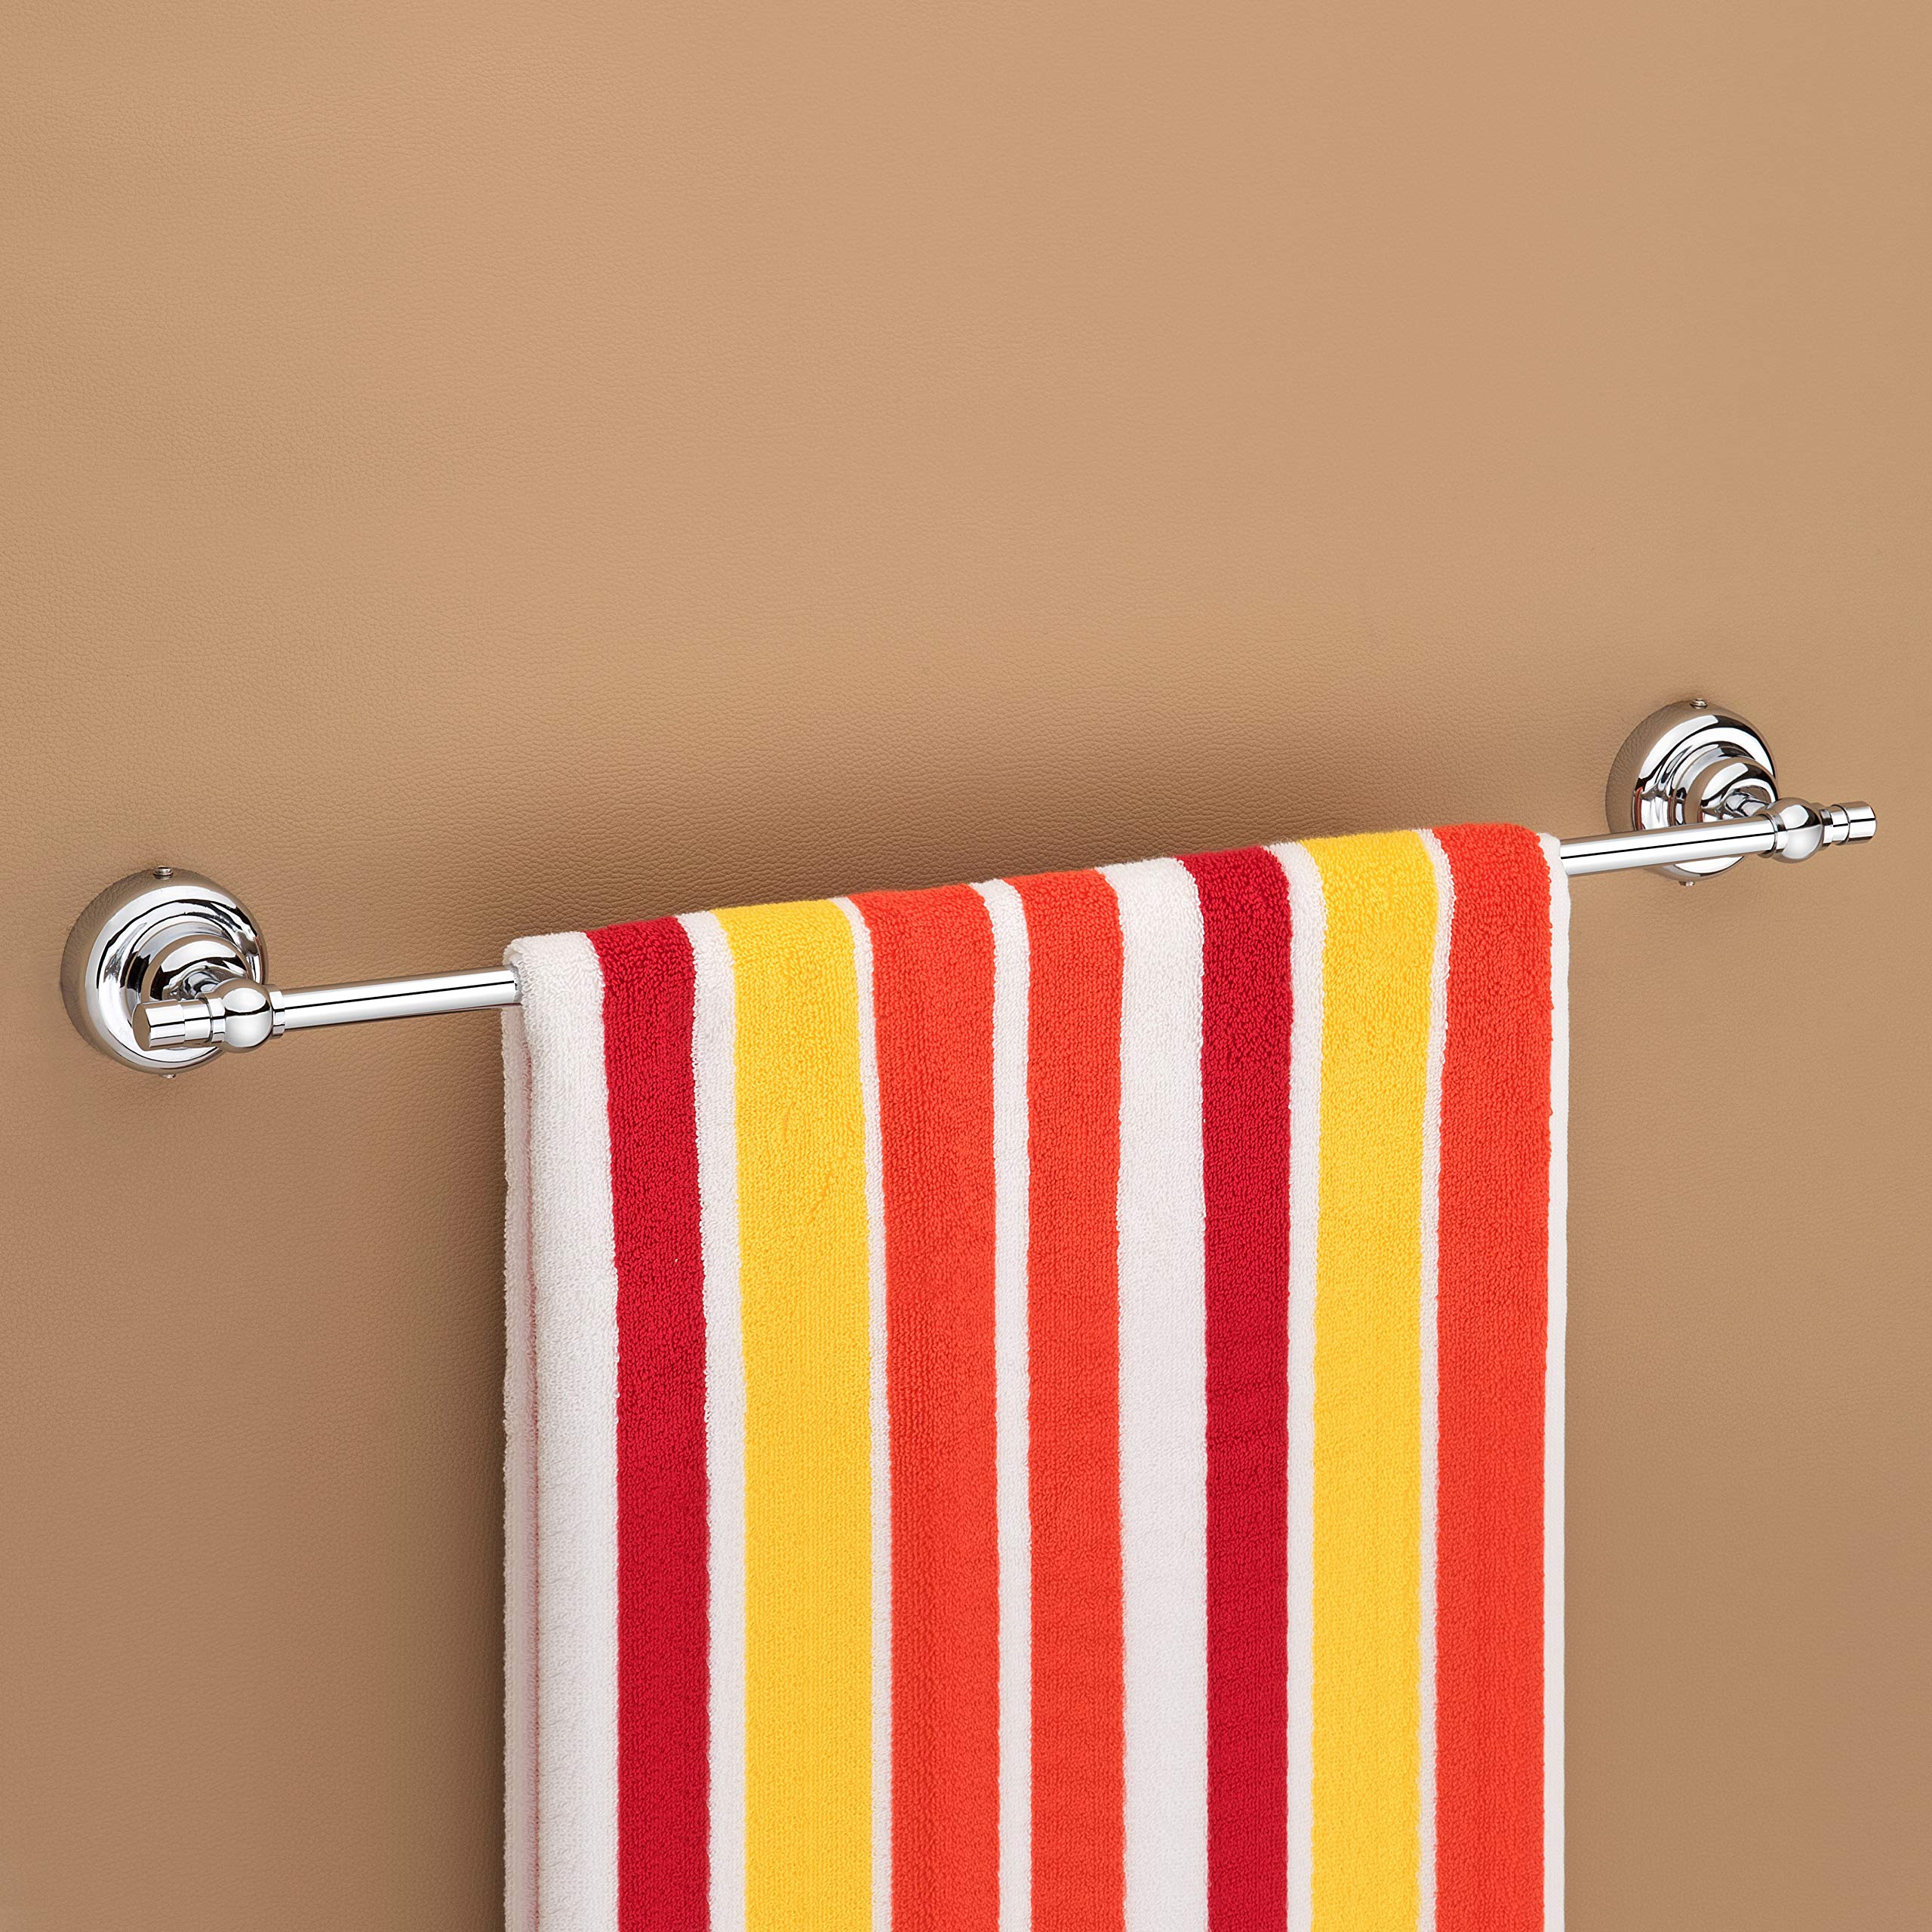 Plantex Stainless Steel 304 Grade Towel Rack with Stainless Steel 304 Grade Skyllo Bathroom Accessories Set 5pcs (Towel Rod/Napkin Ring/Tumbler Holder/Soap Dish/Robe Hook)